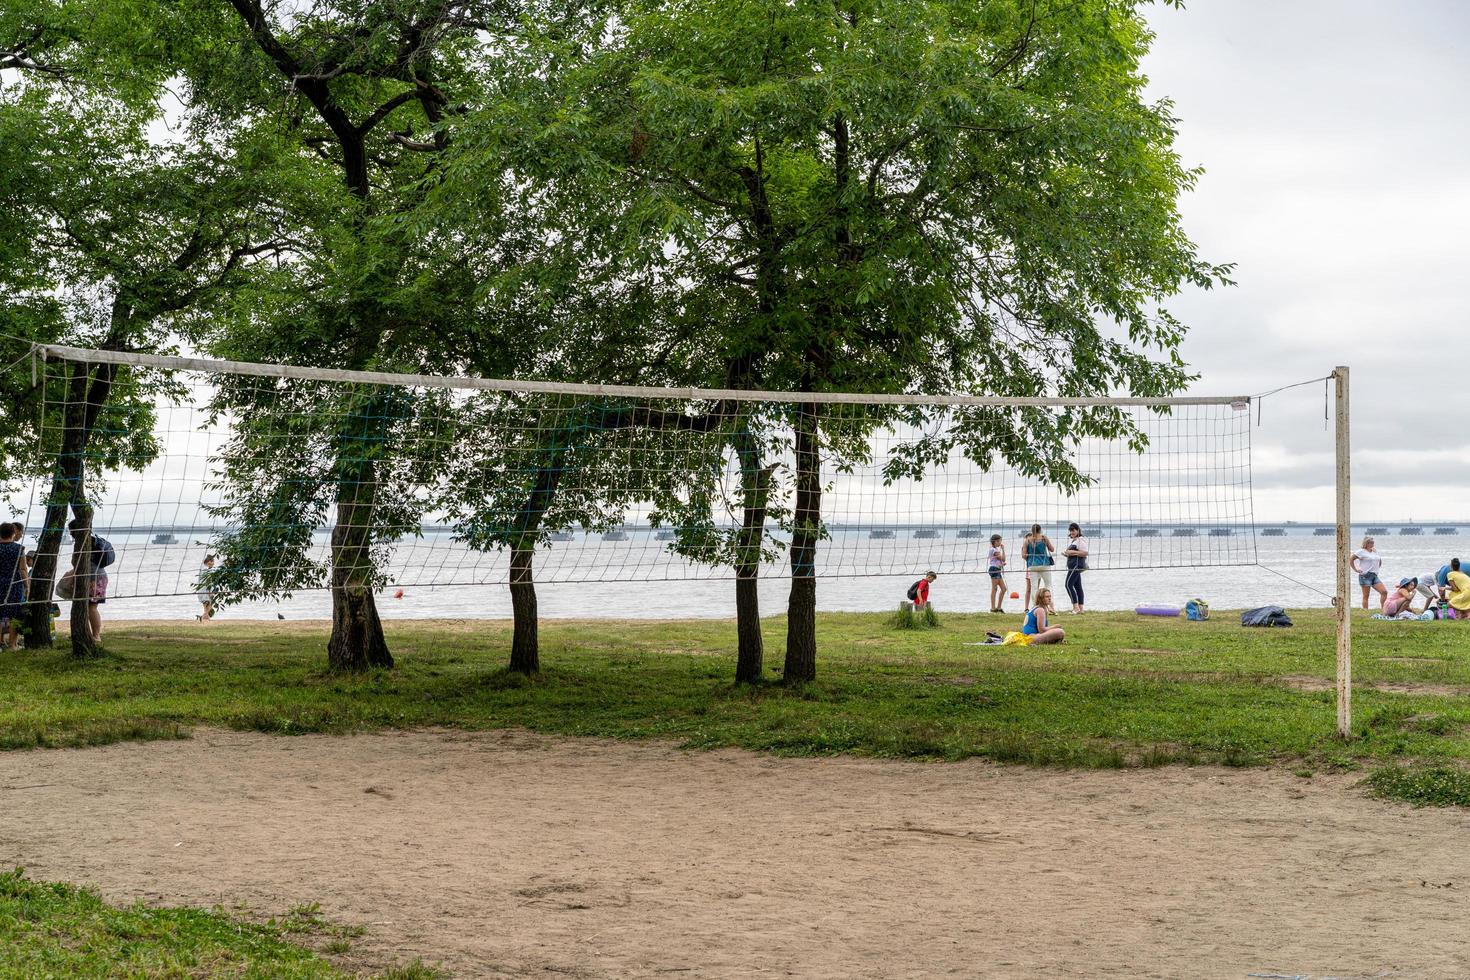 vladivostok, Ryssland-23 juli 2020 - idrottsplats i stadsparken foto